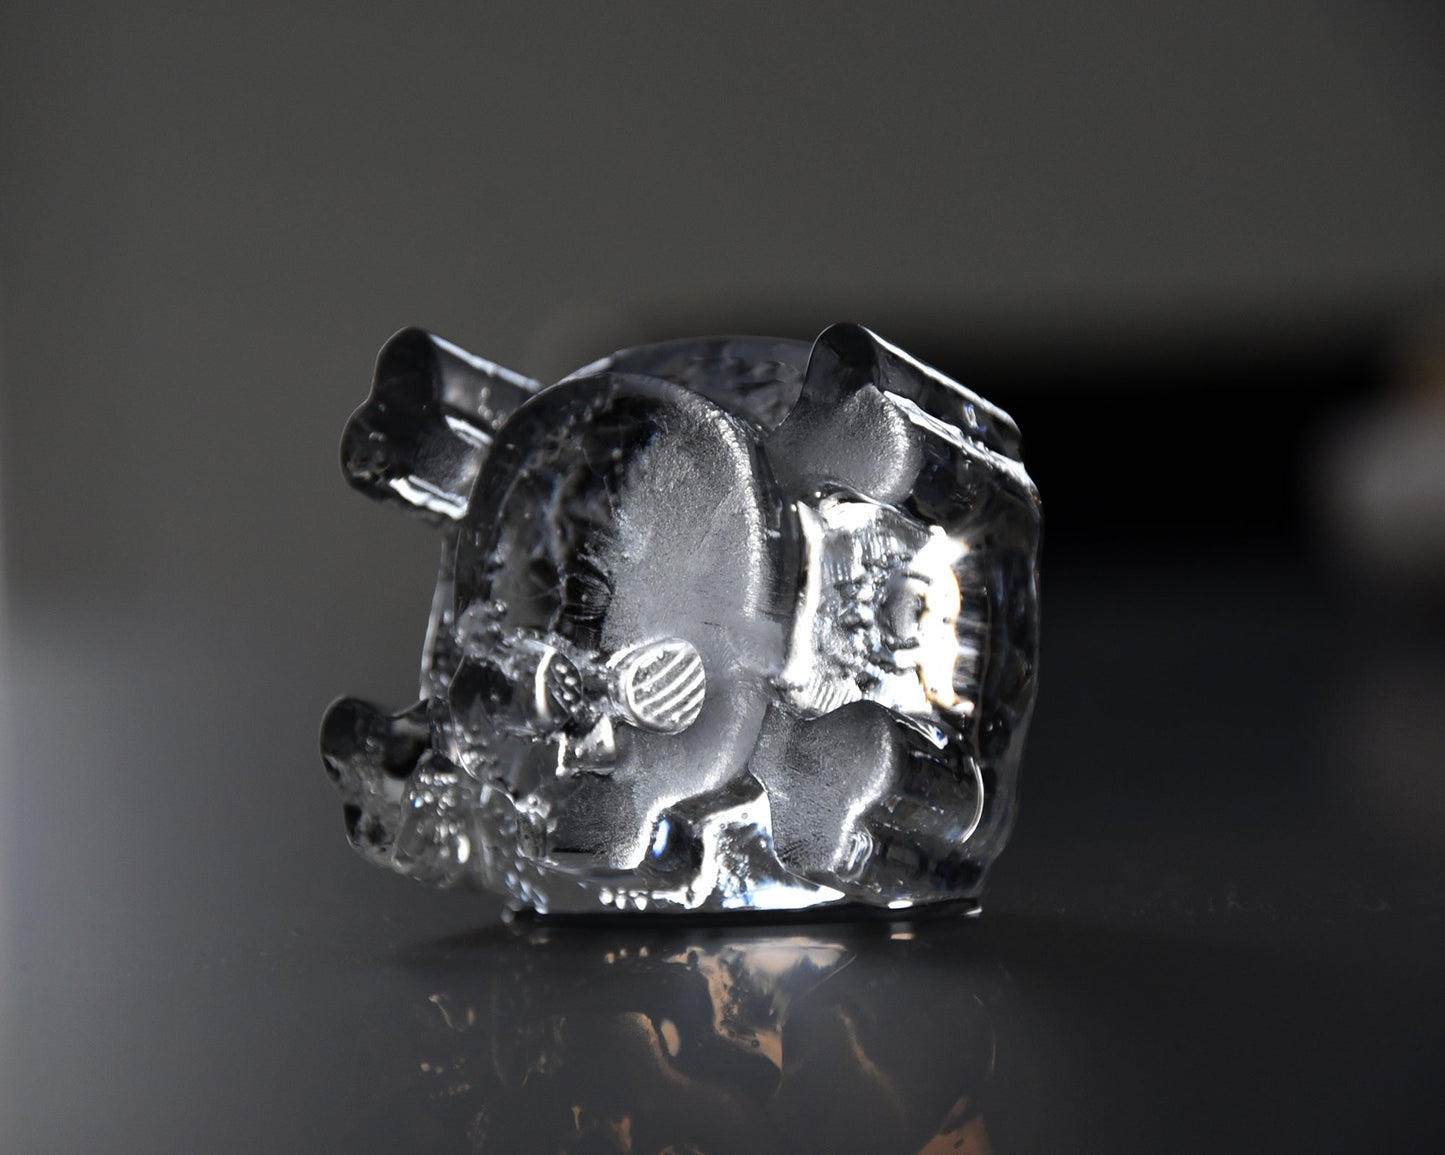 Skull and Crossbones - Honest Ice